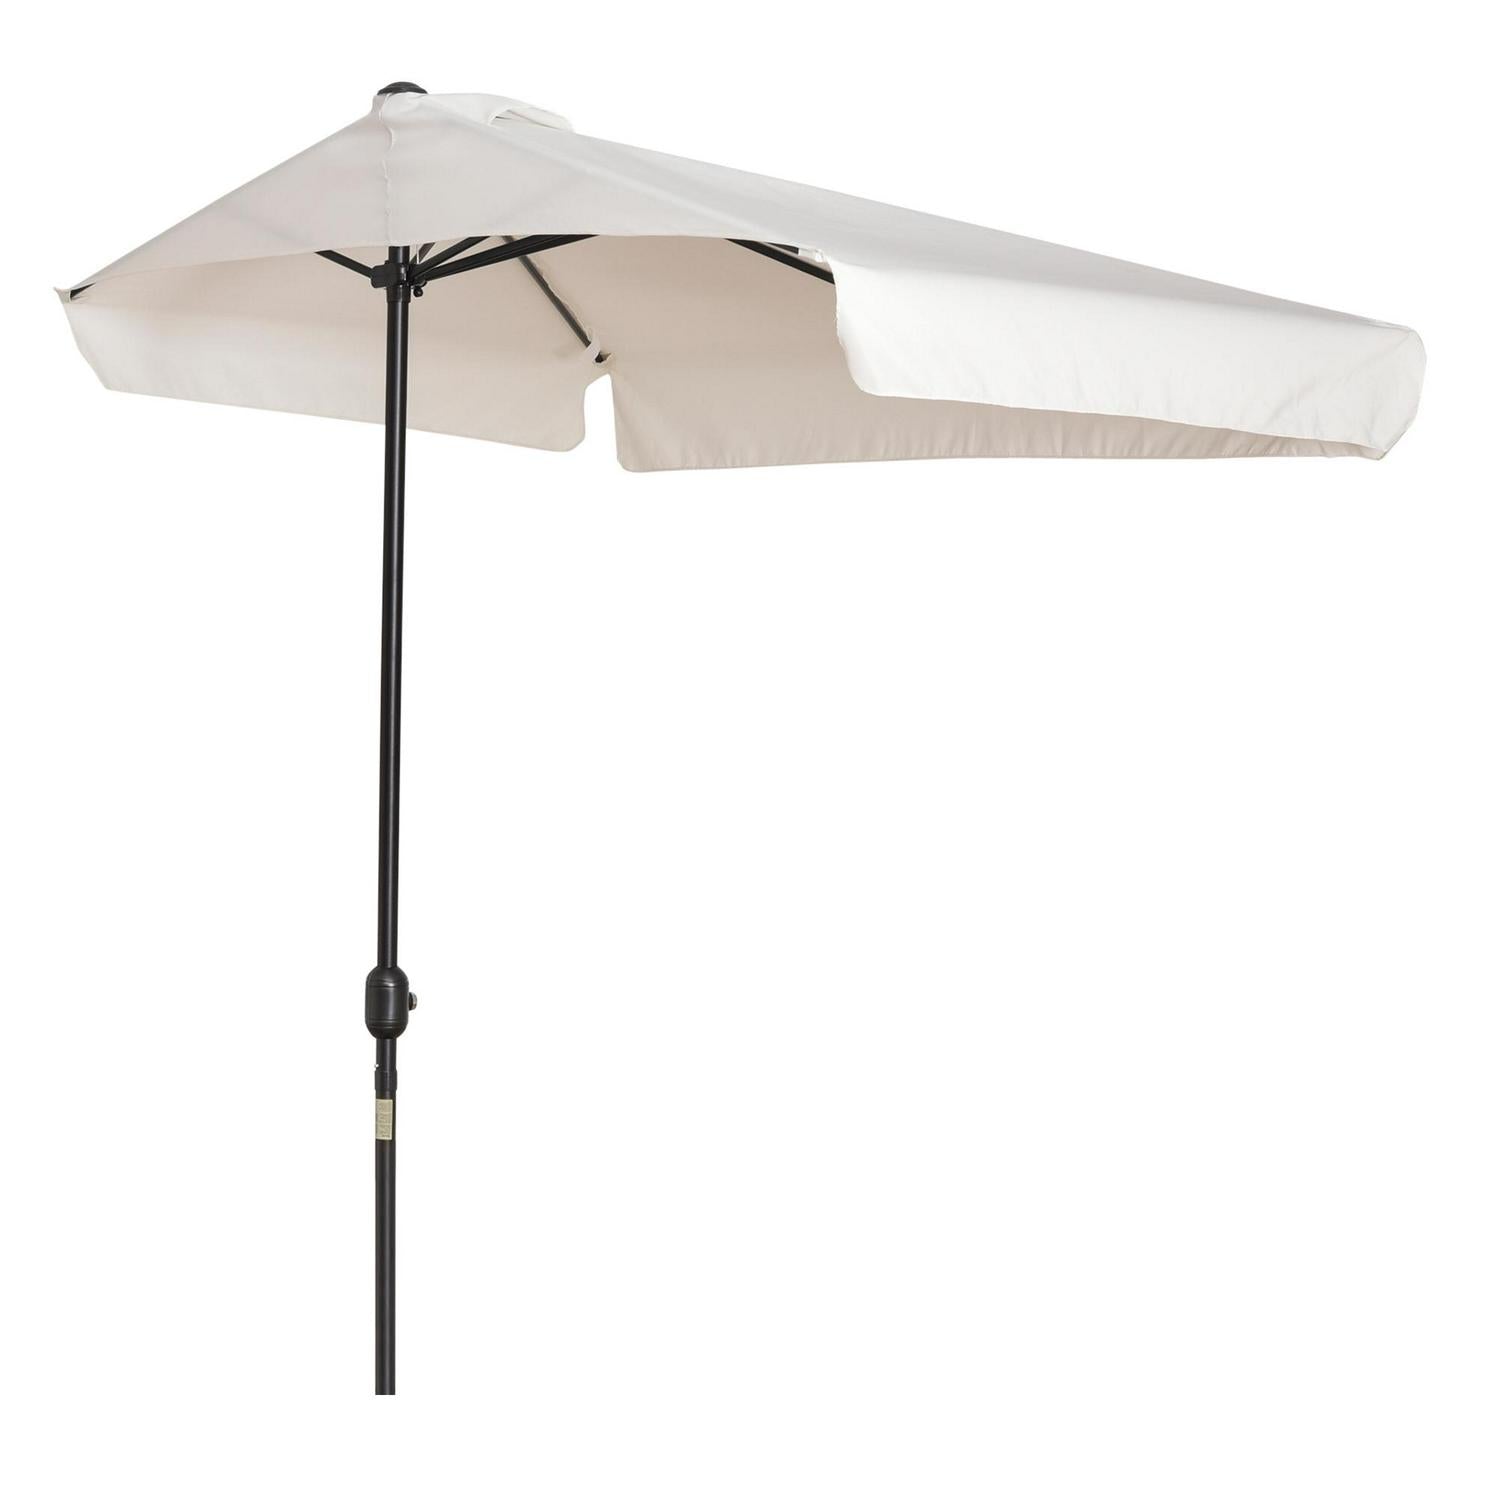 Half Round Parasol Umbrella Balcony -Cream White